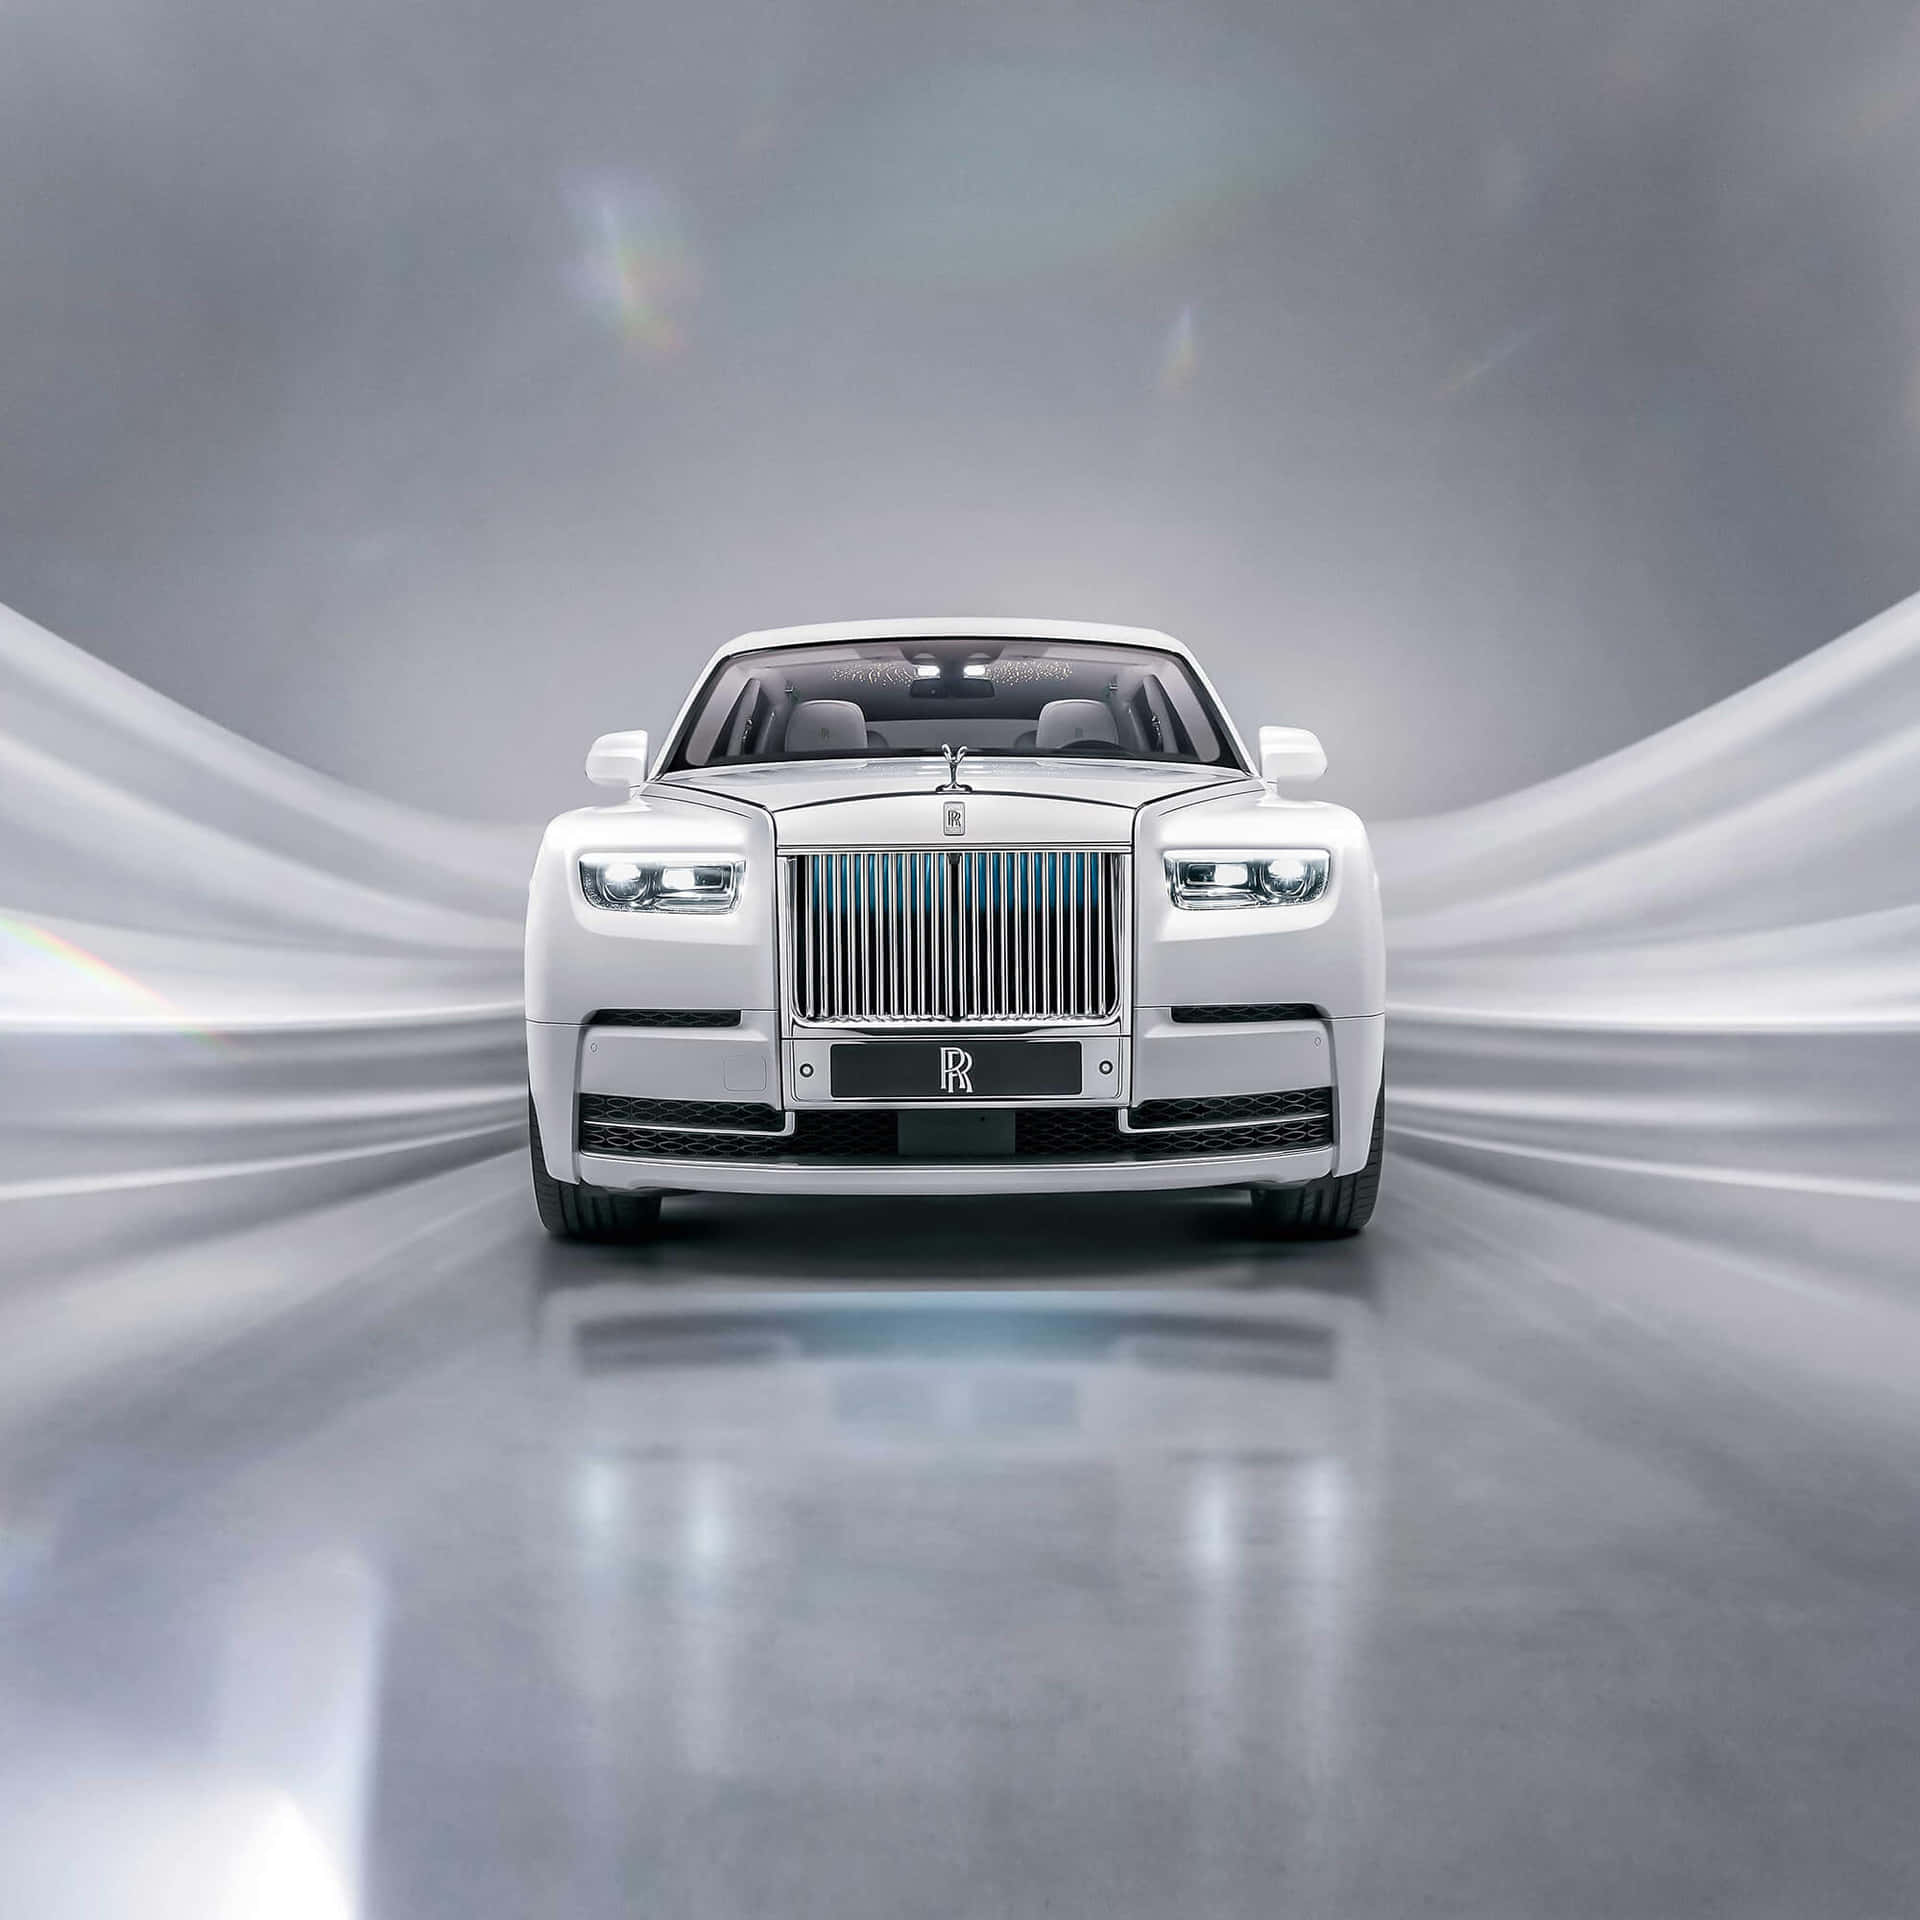 Luxurious Rolls-royce Phantom, British Craftsmanship At Its Finest